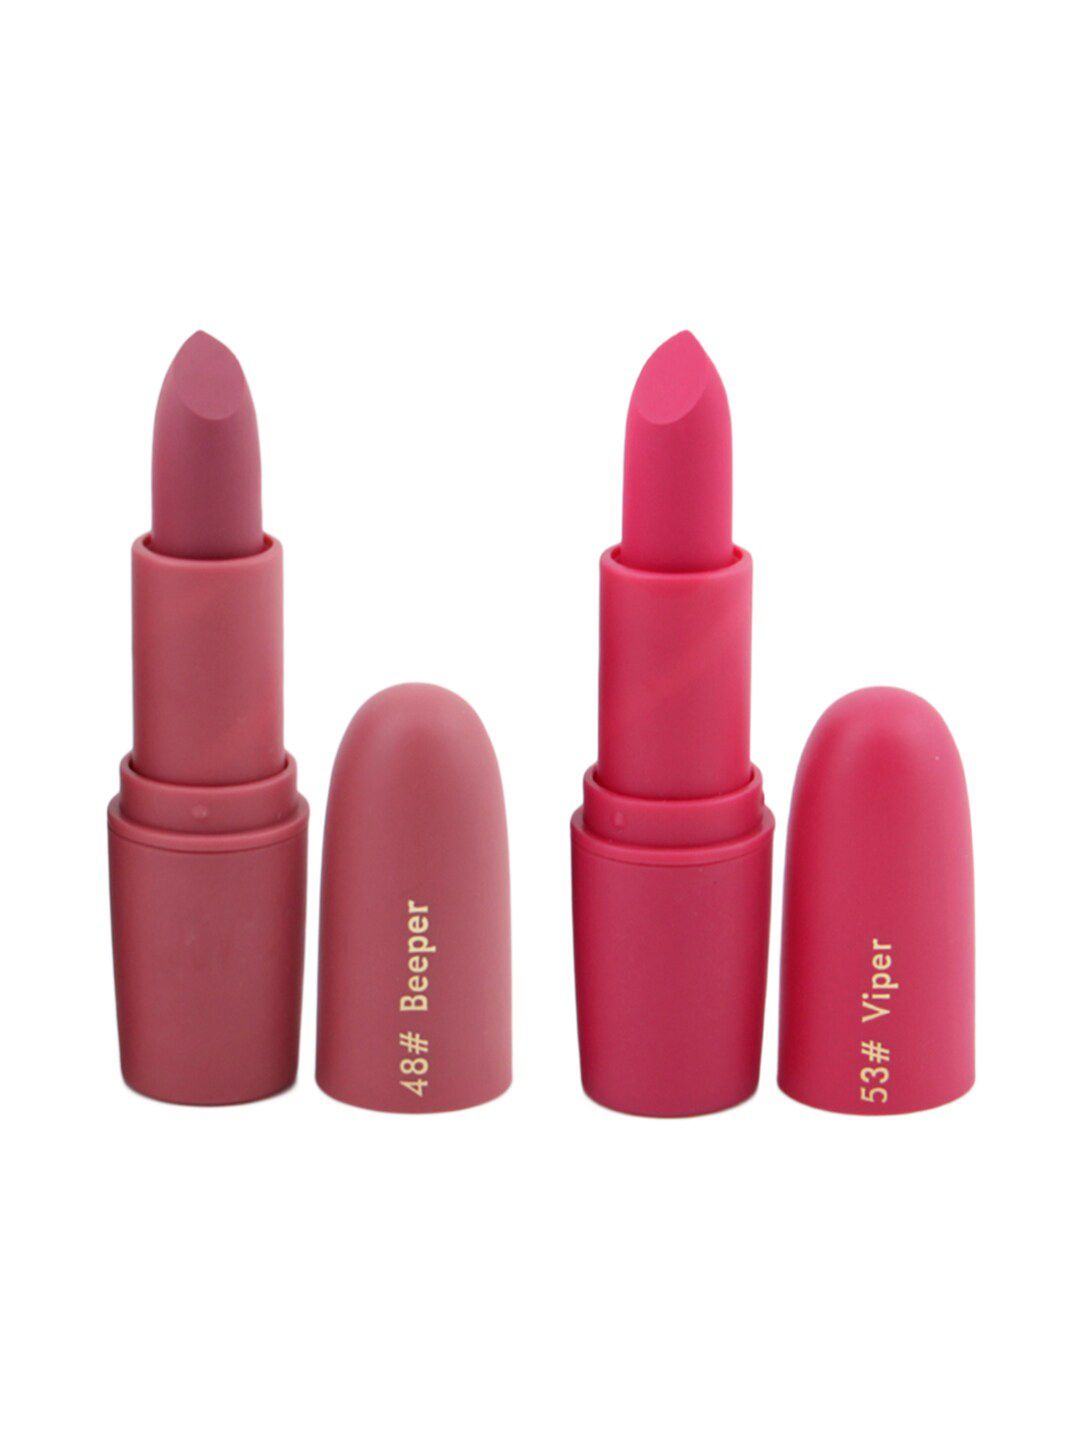 MISS ROSE Professional Make-Up Set of 2 Matte Creamy Lipsticks - Beeper 48 & Viper 53 Price in India